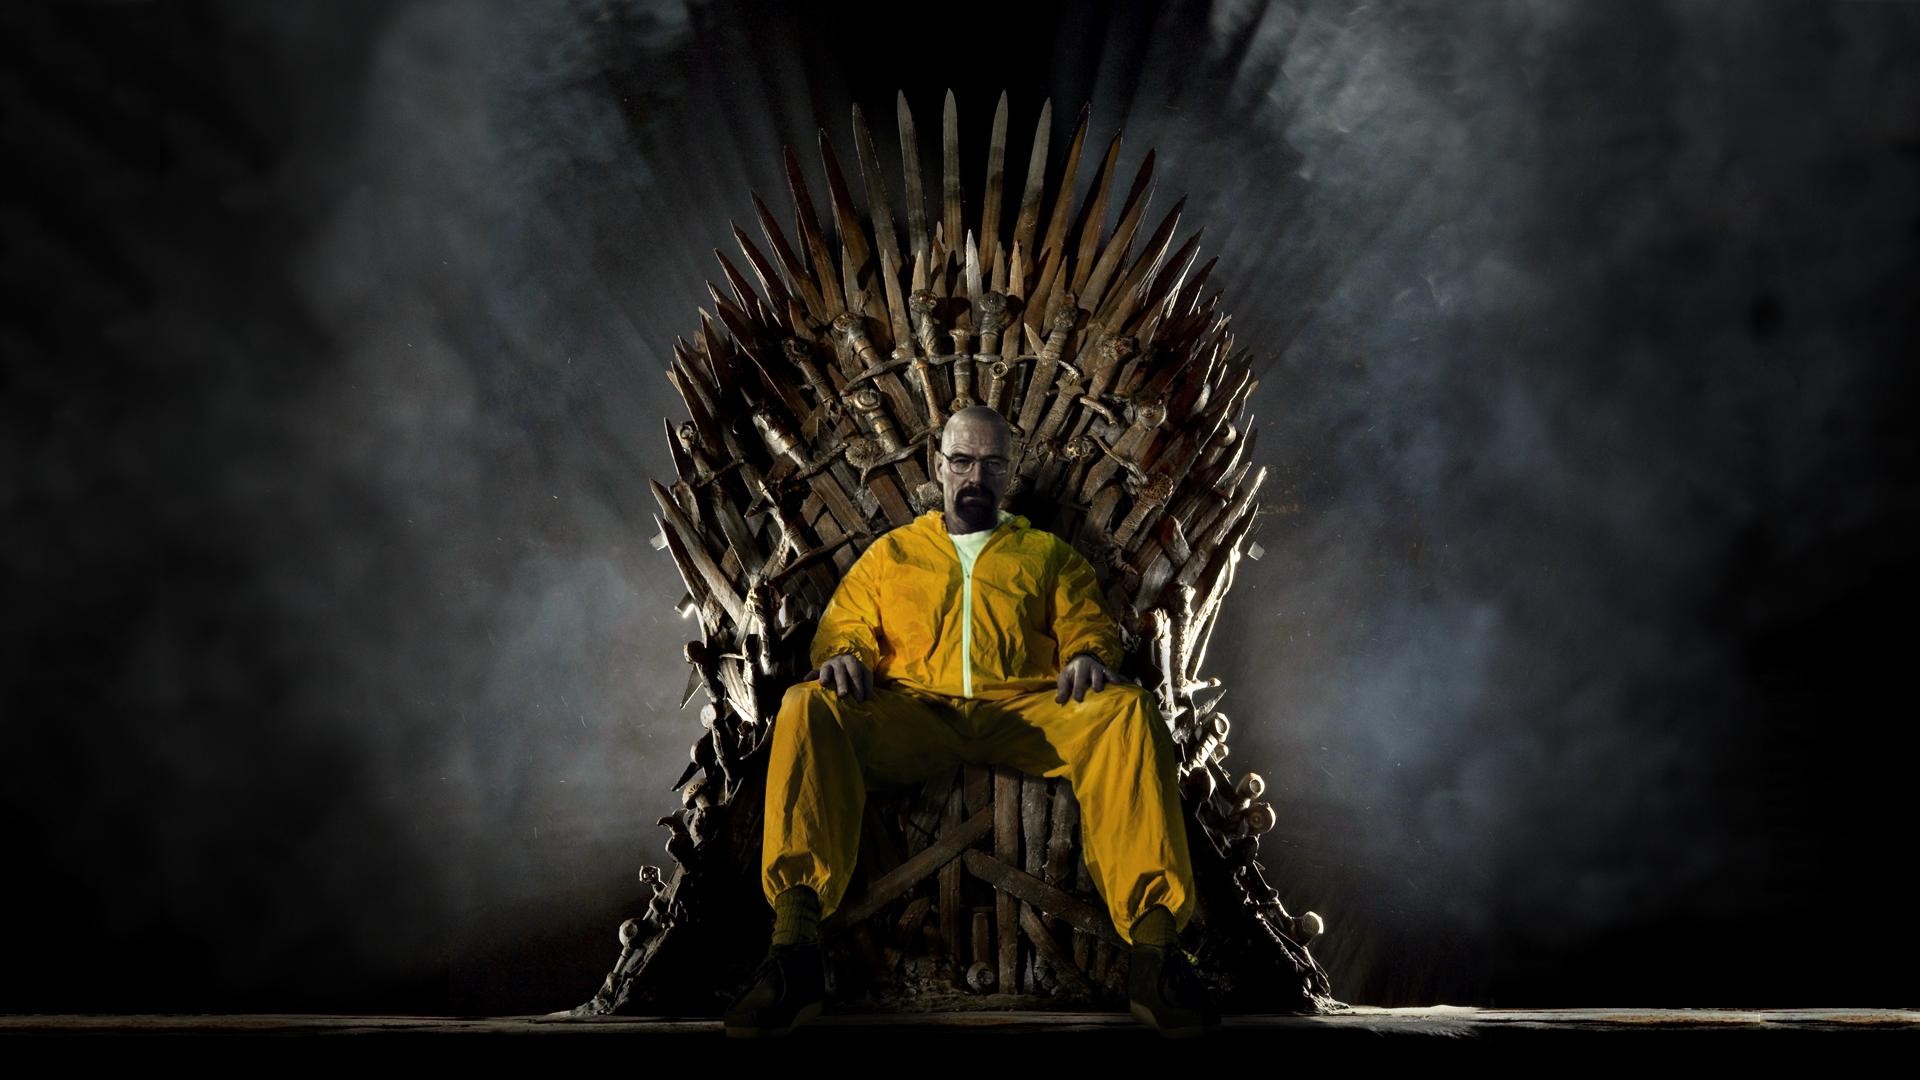 Walter White on the Iron Throne[Breaking Bad Wallpaper